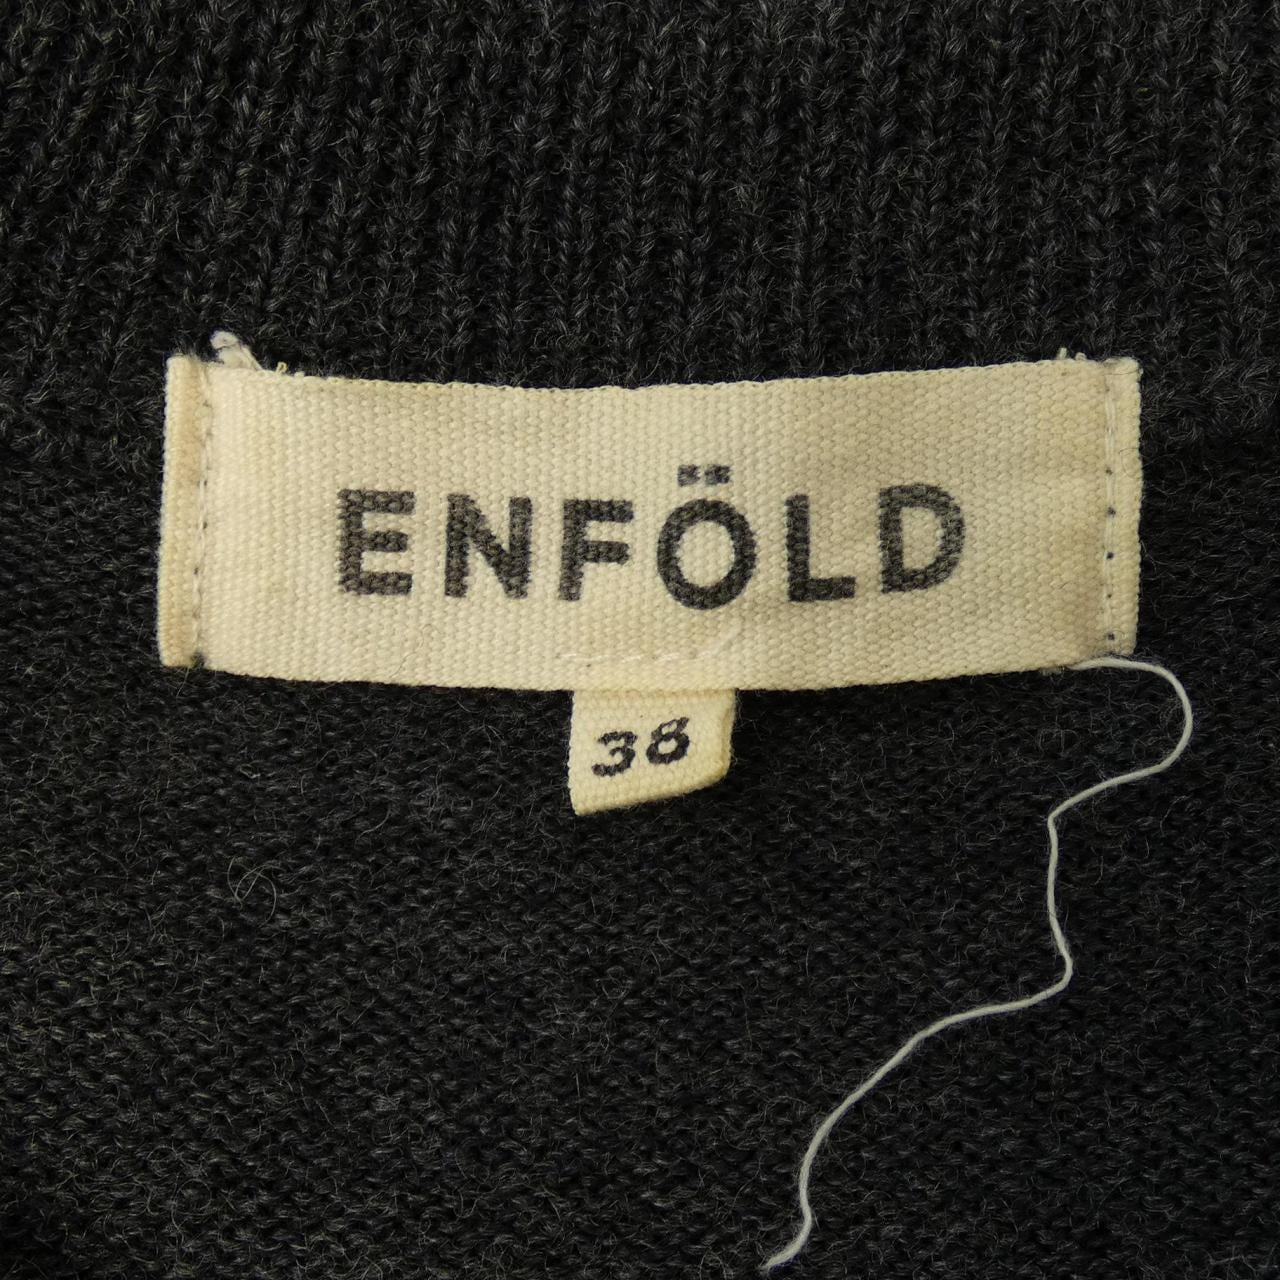 Enford ENFOLD针织衫